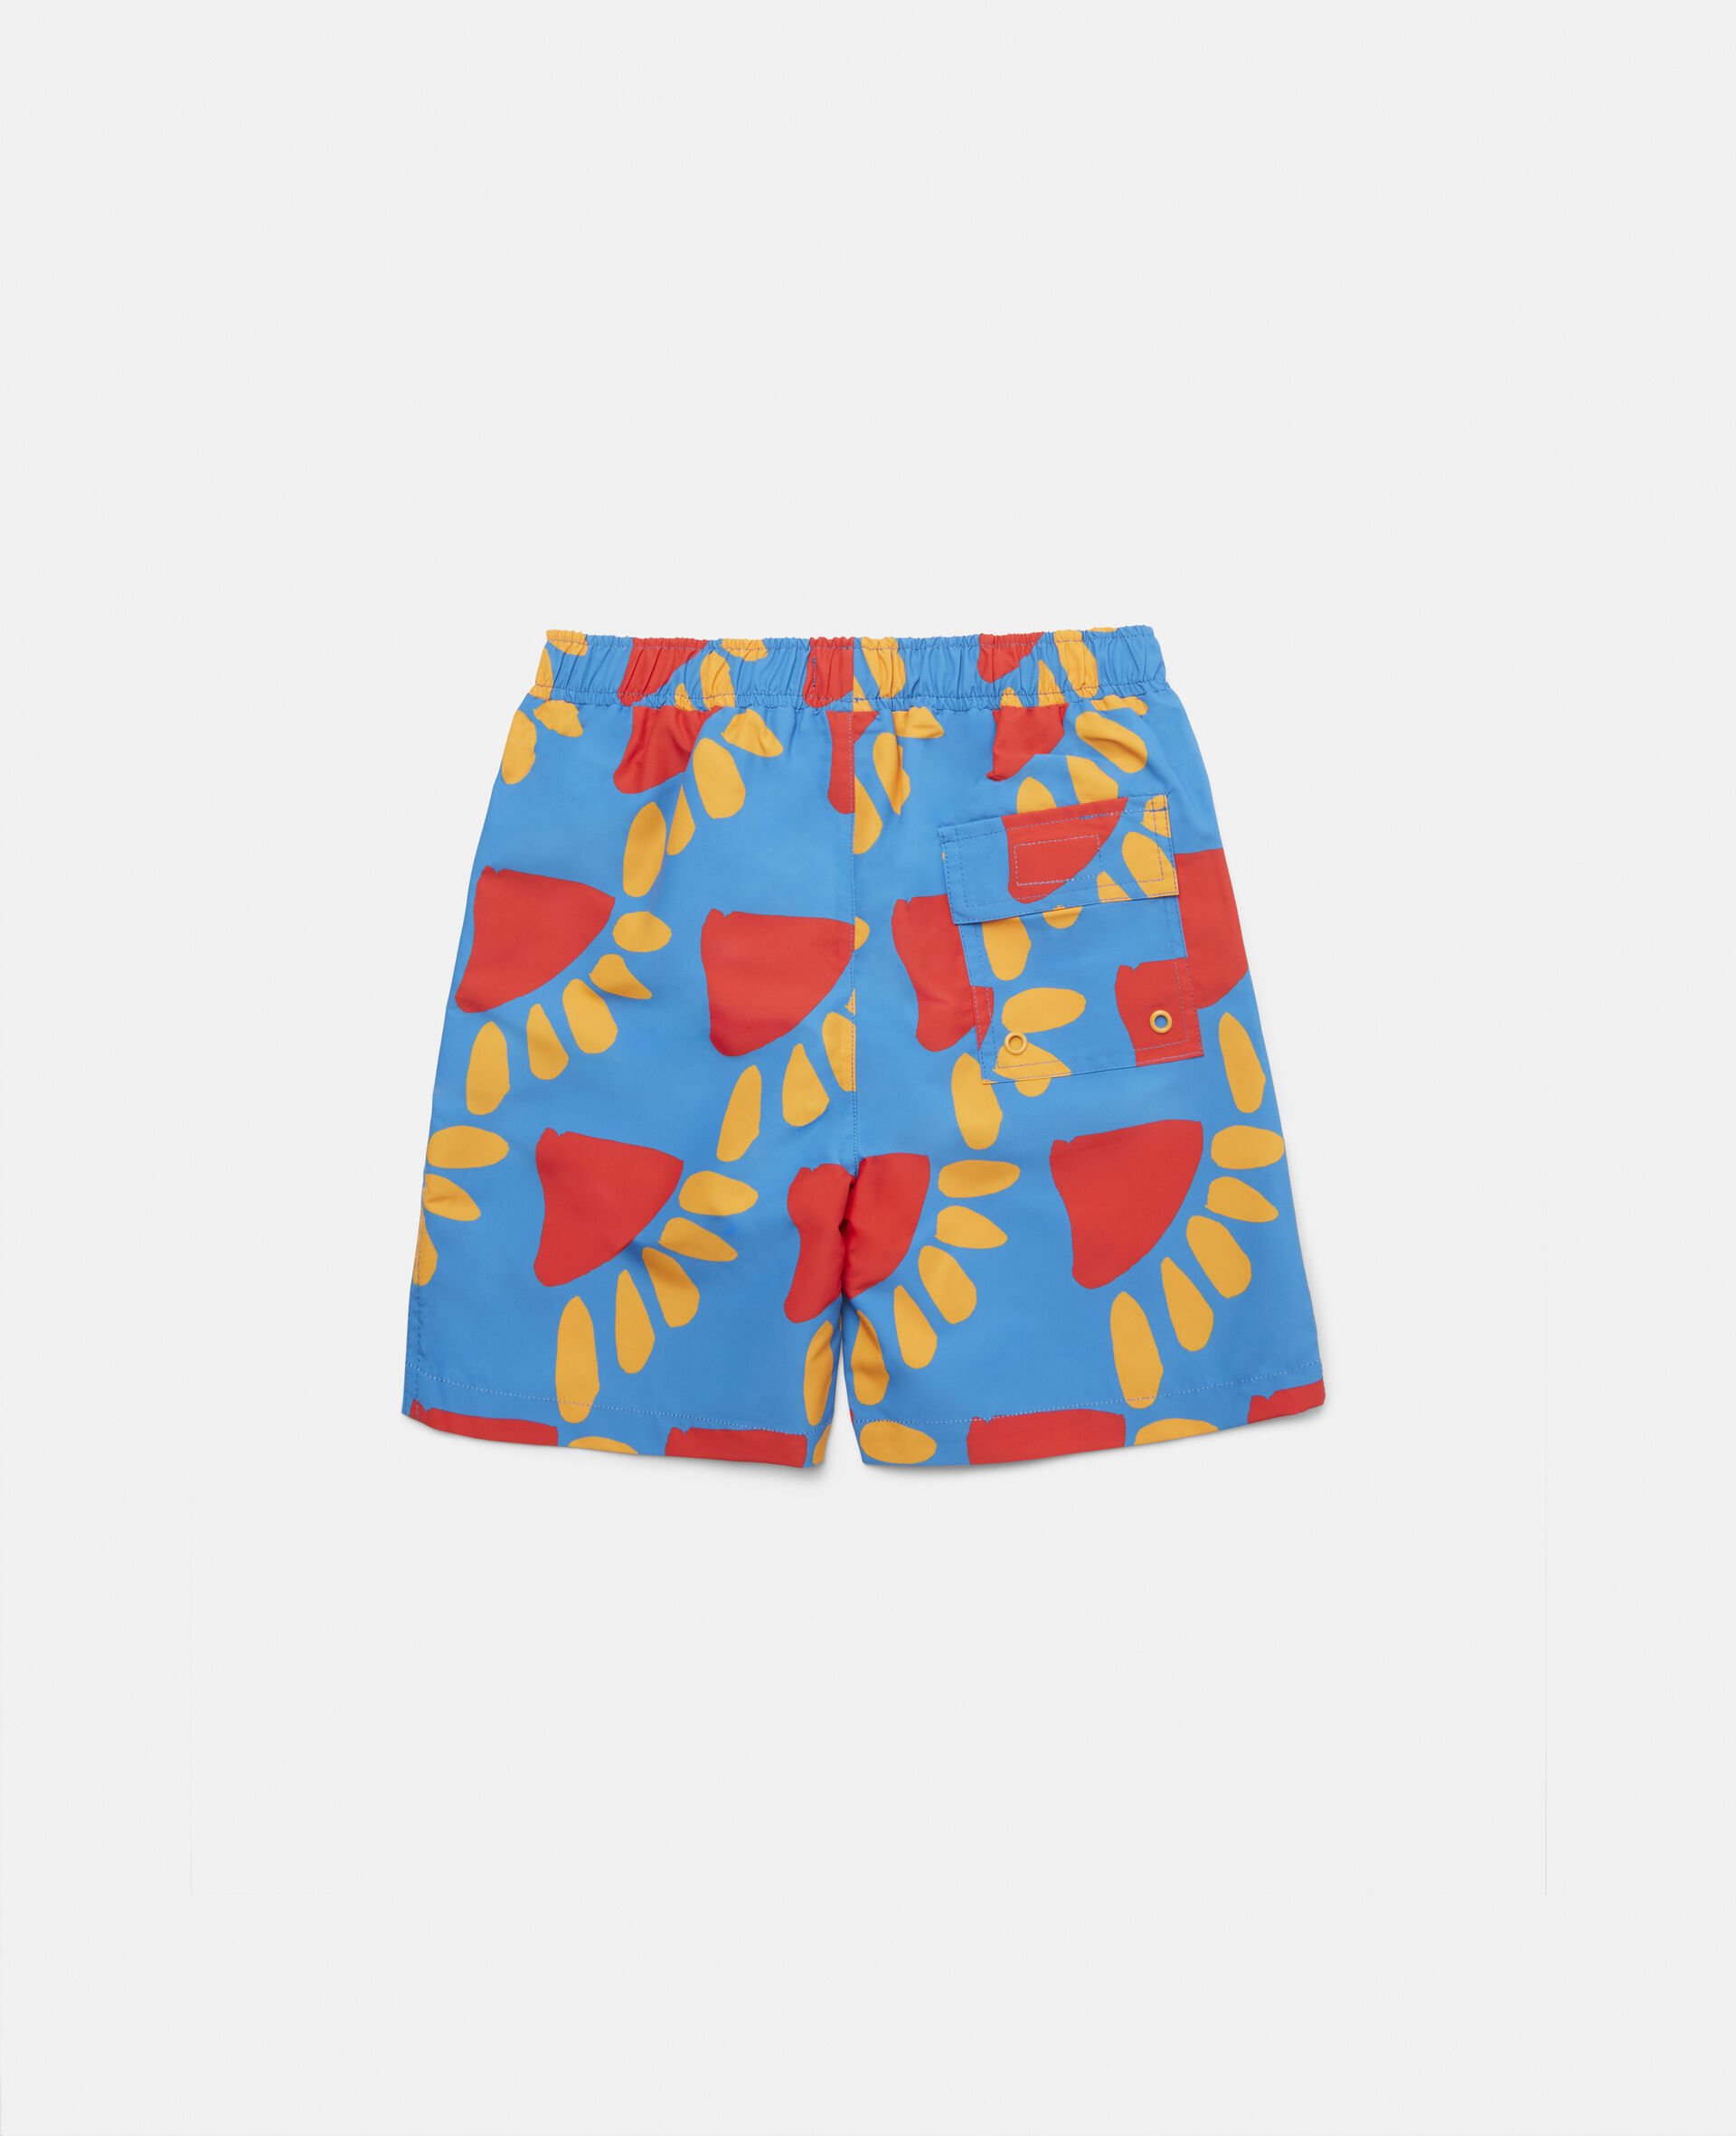 Graphic Sun Print Swim Shorts-Multicolour-large image number 2